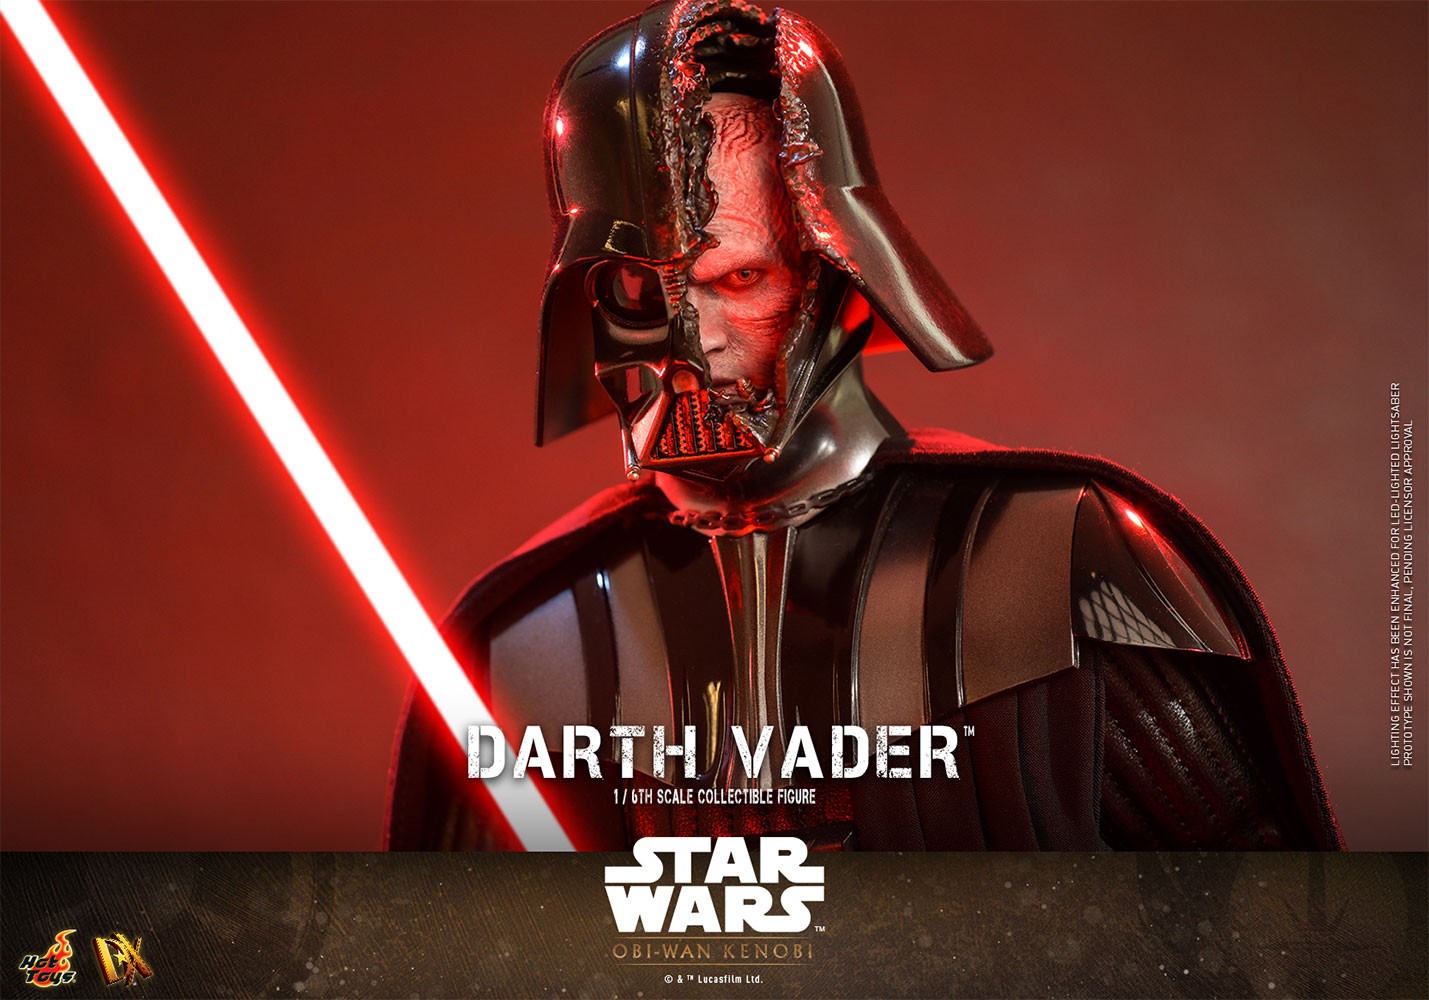 Darth Vader (Special Edition) Exclusive Edition (Prototype Shown) View 15